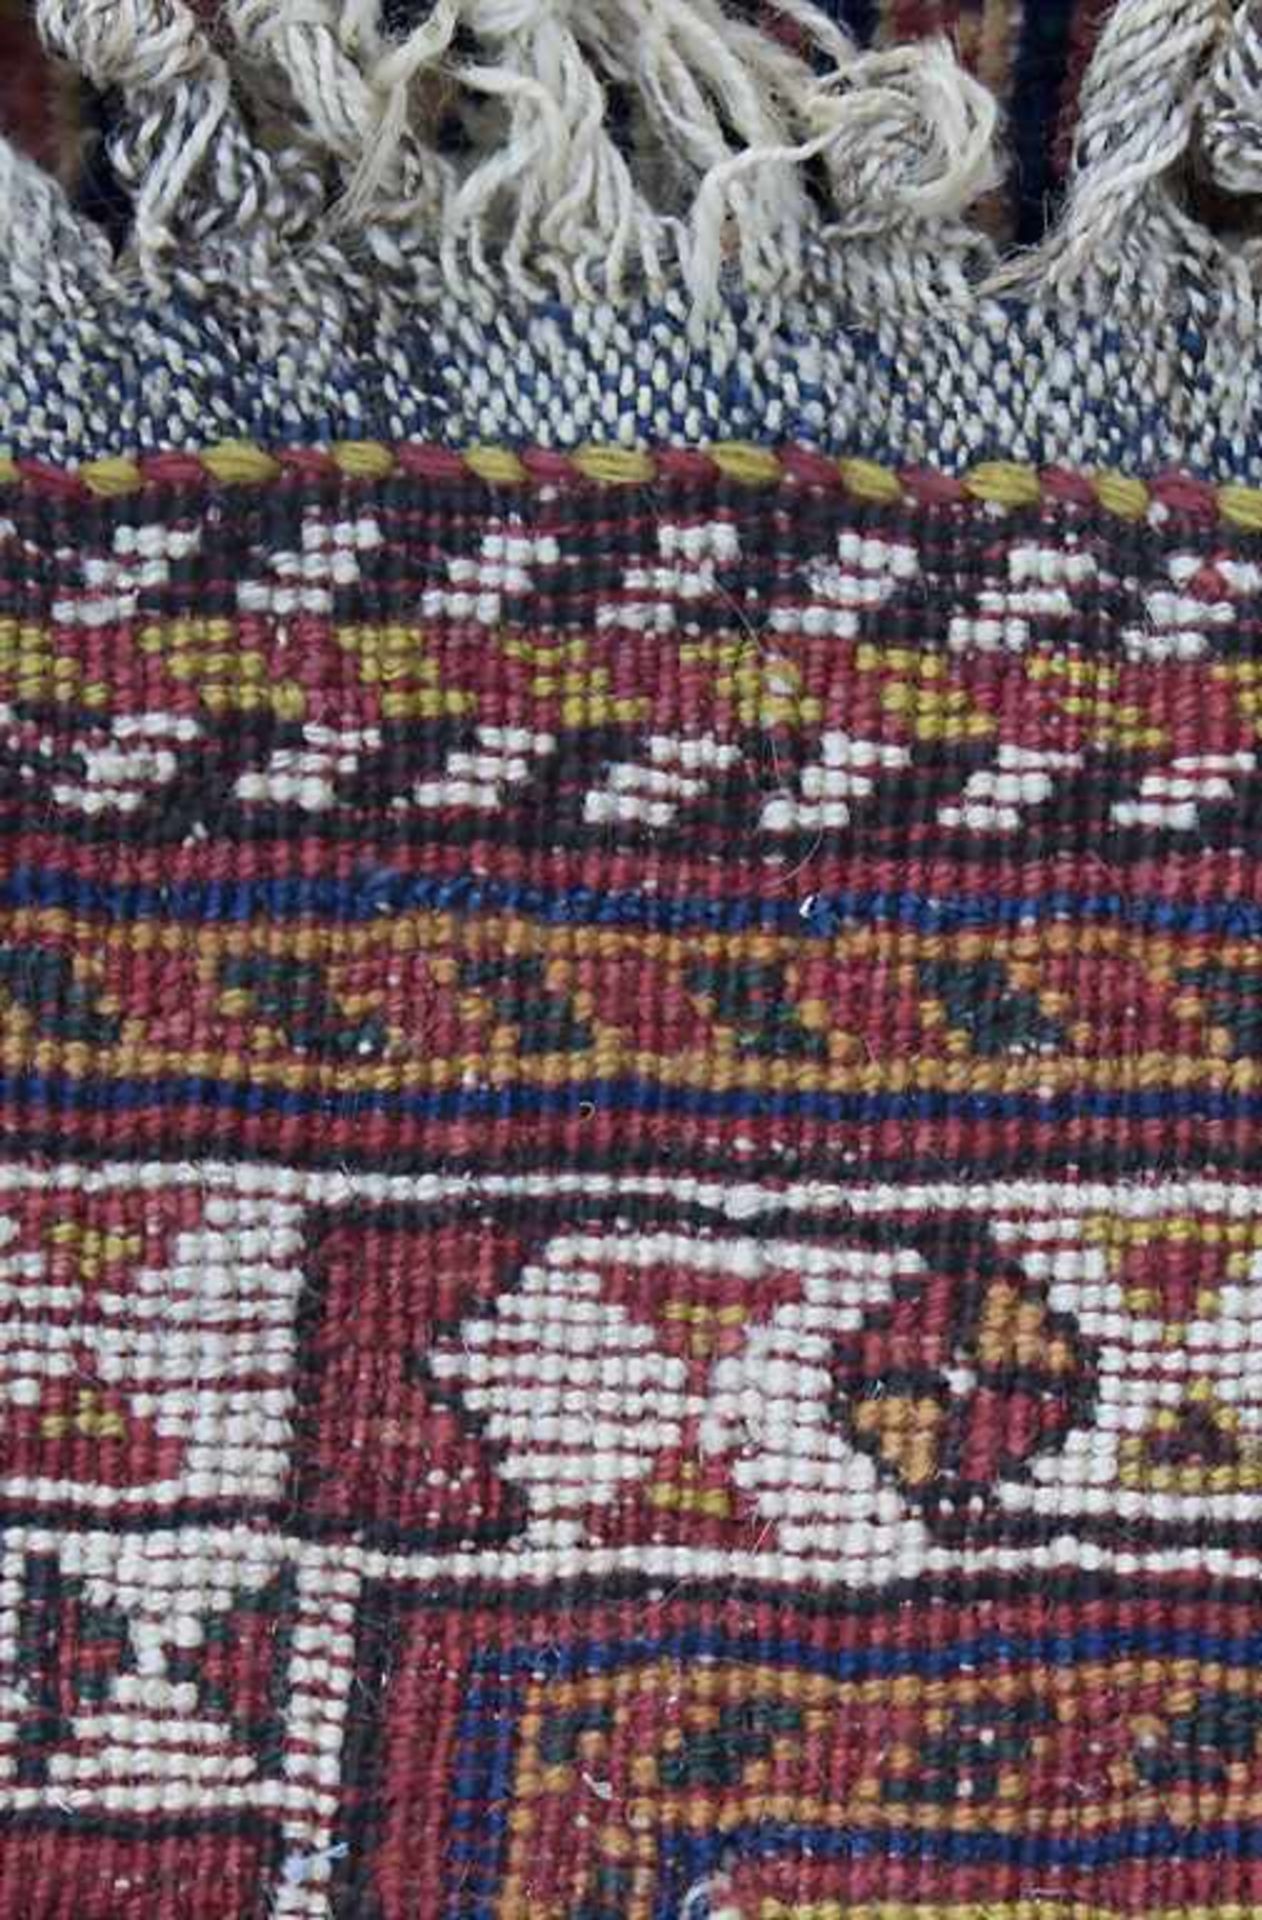 Orientteppich / An oriental carpetMaterial: Wolle auf Wolle, Maße: 238 x 145 cm, Zustand: gut, - Image 4 of 5